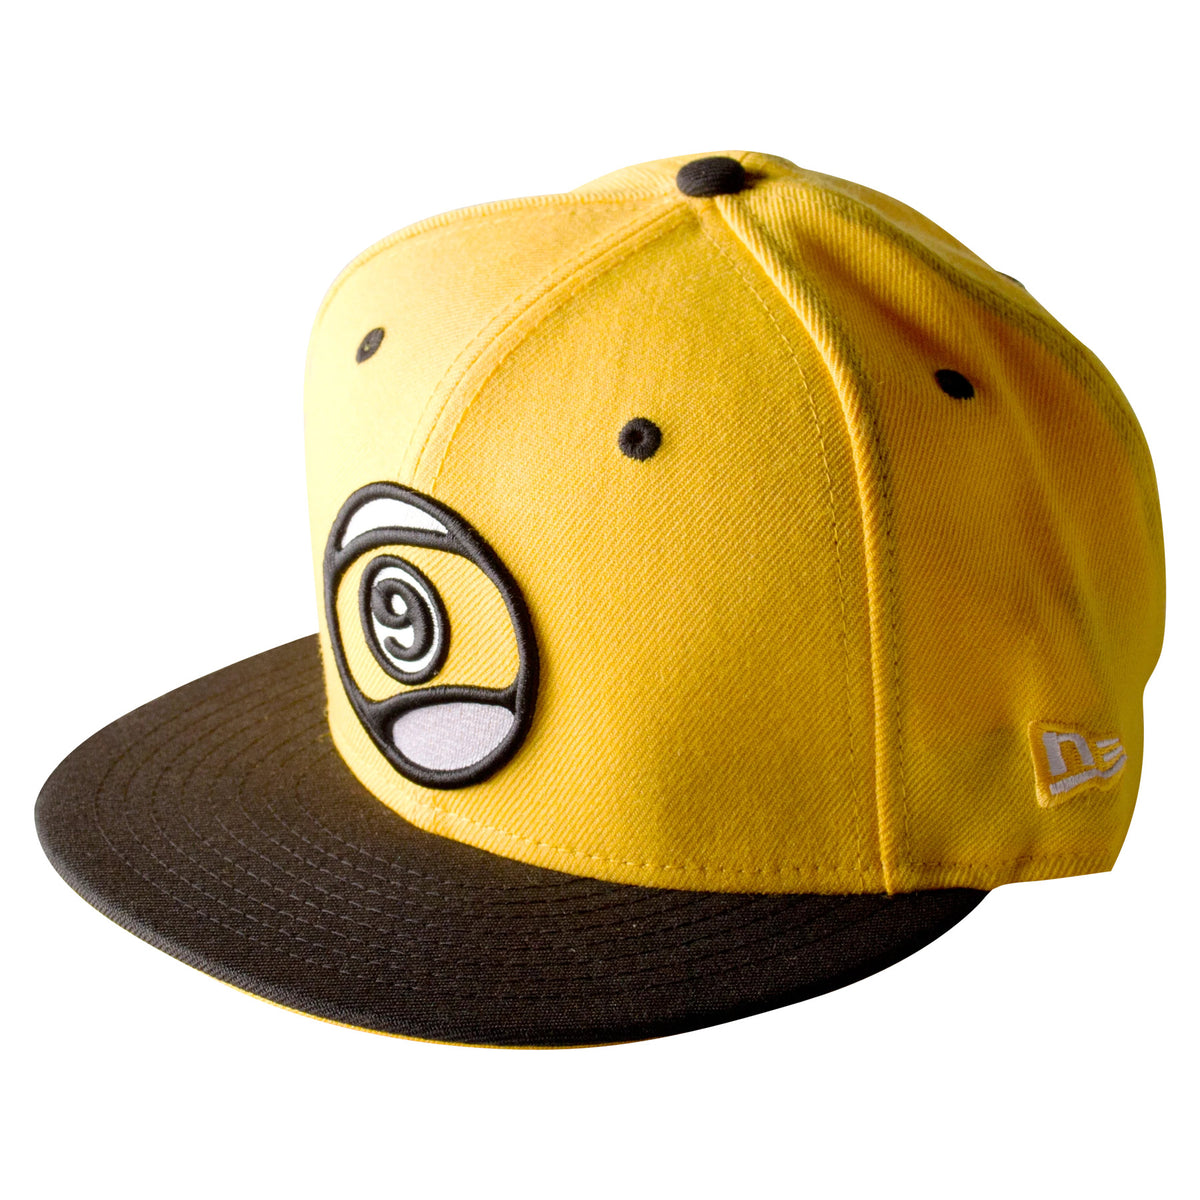 Sector 9 Classic 9 Ball New Era Hat, Yellow